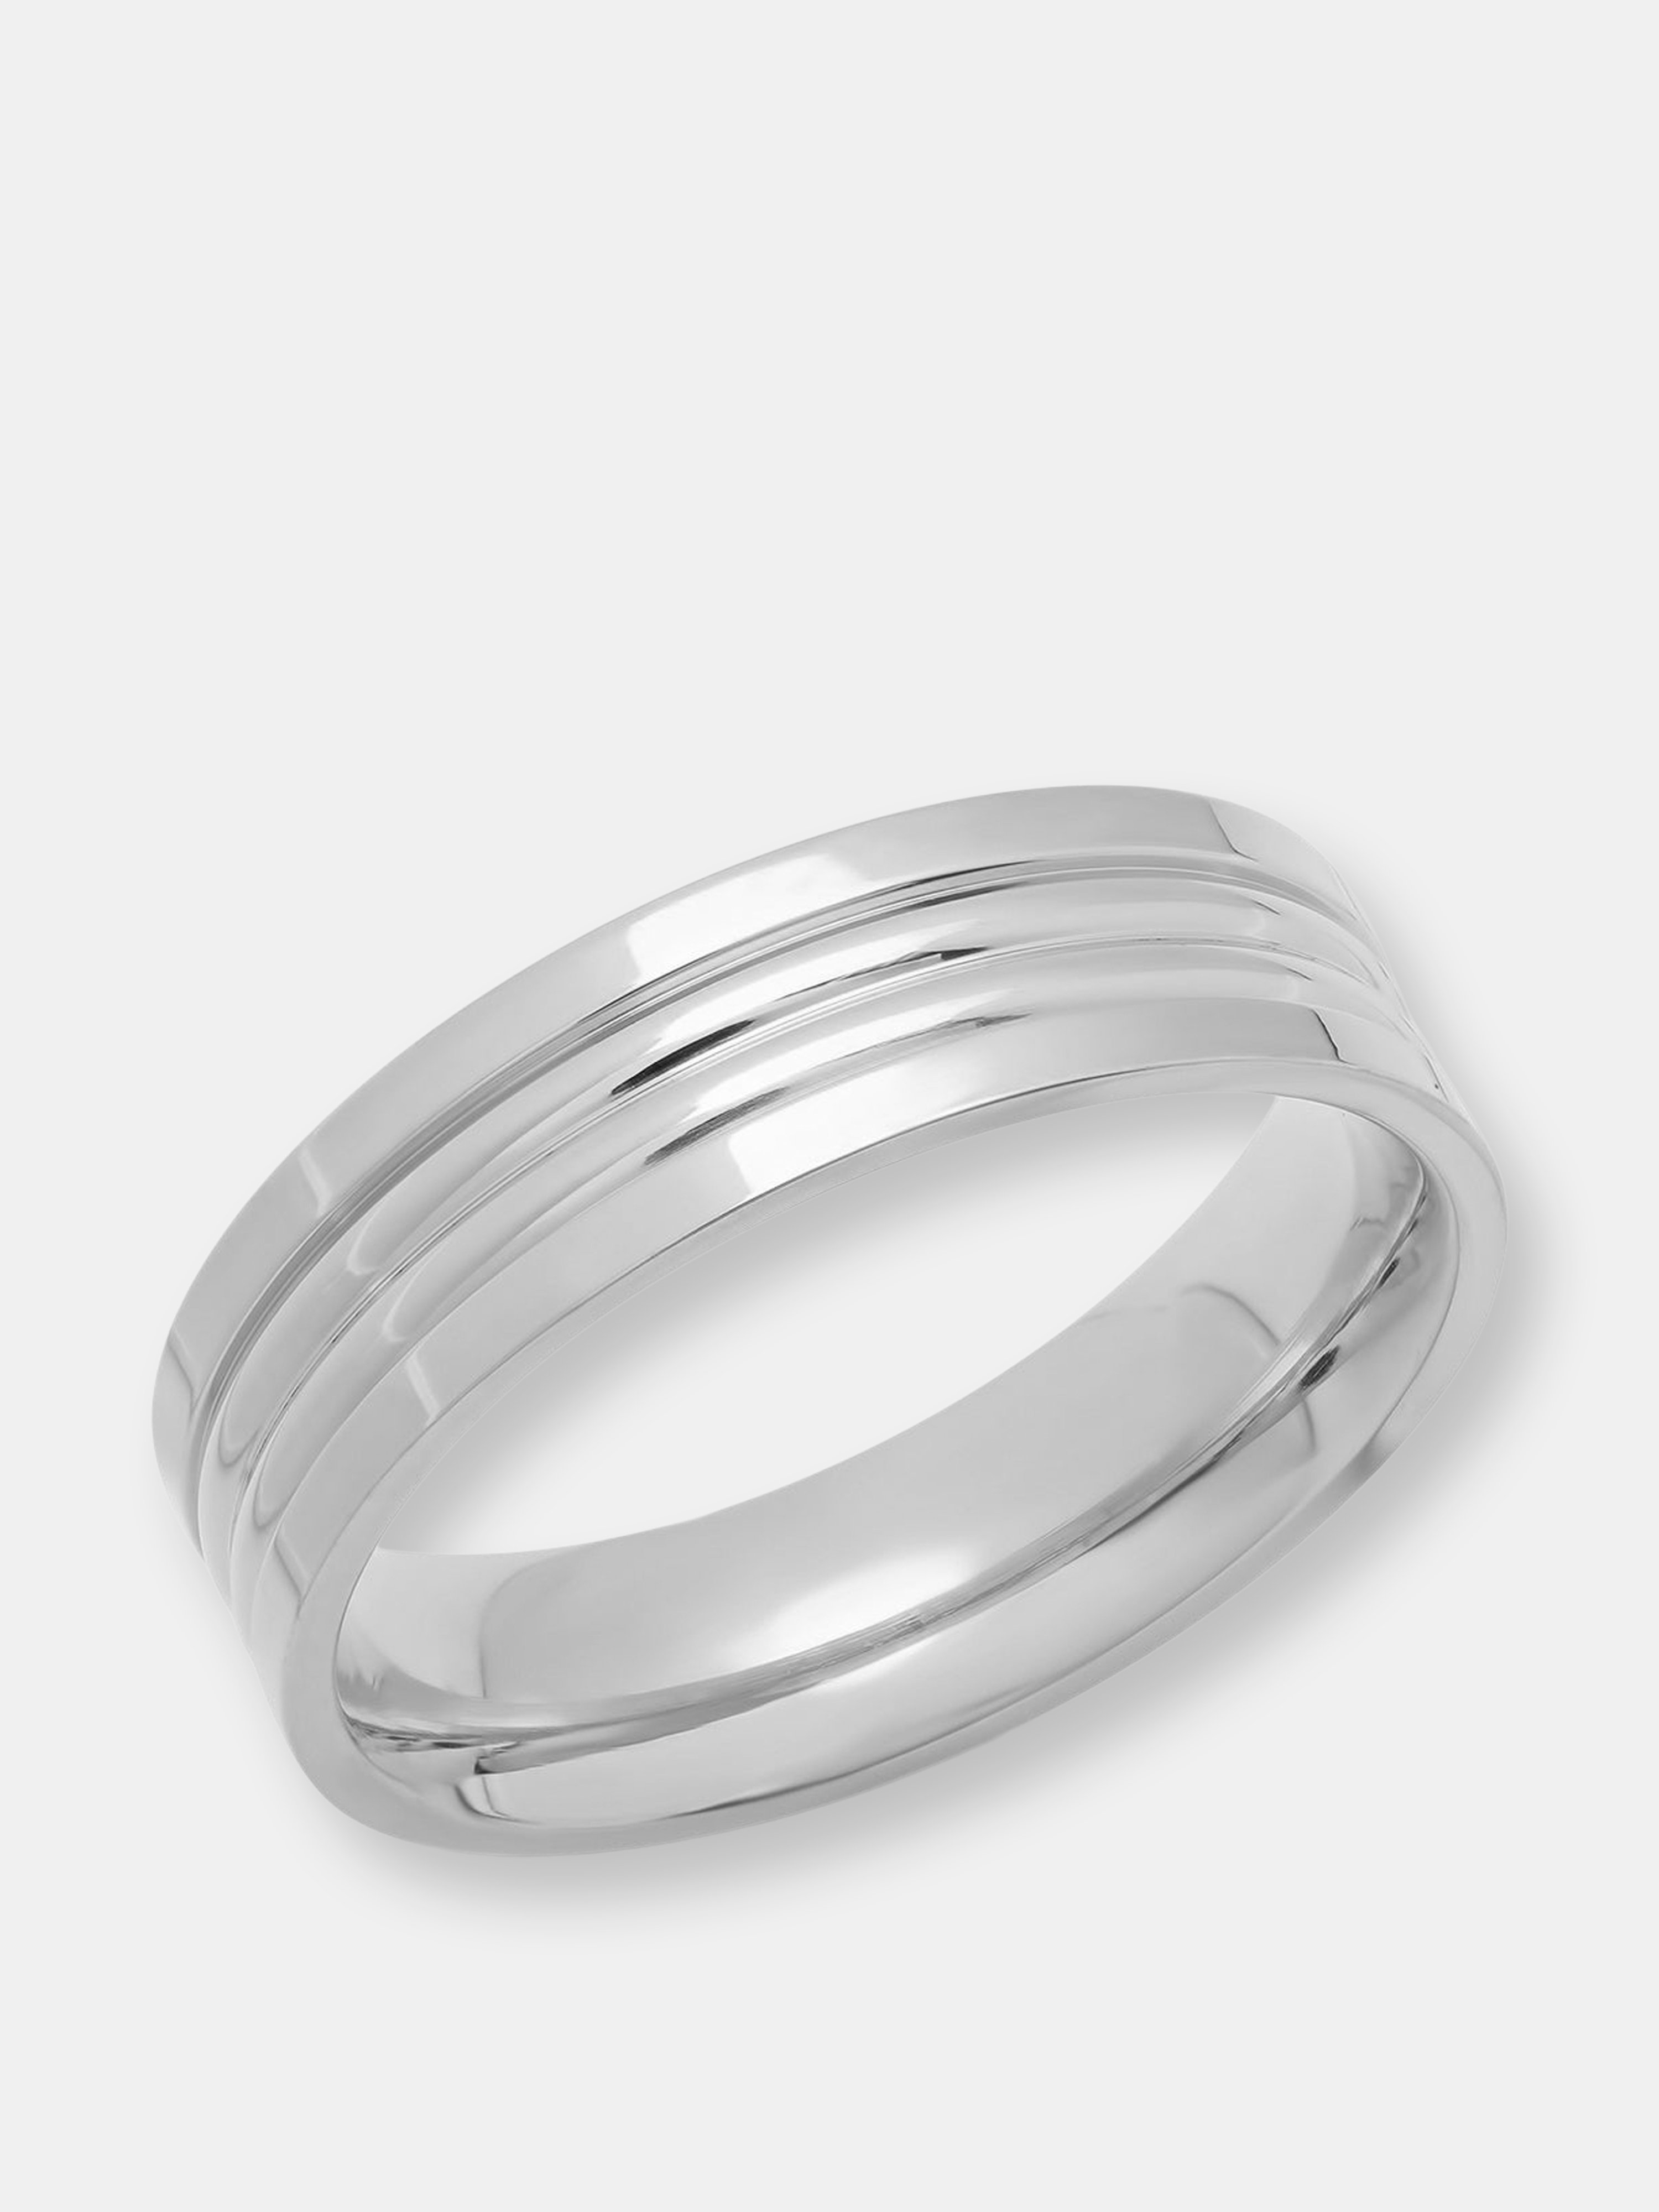 Hmy Jewelry Steeltime Striped Greek Key Ring Band In Black